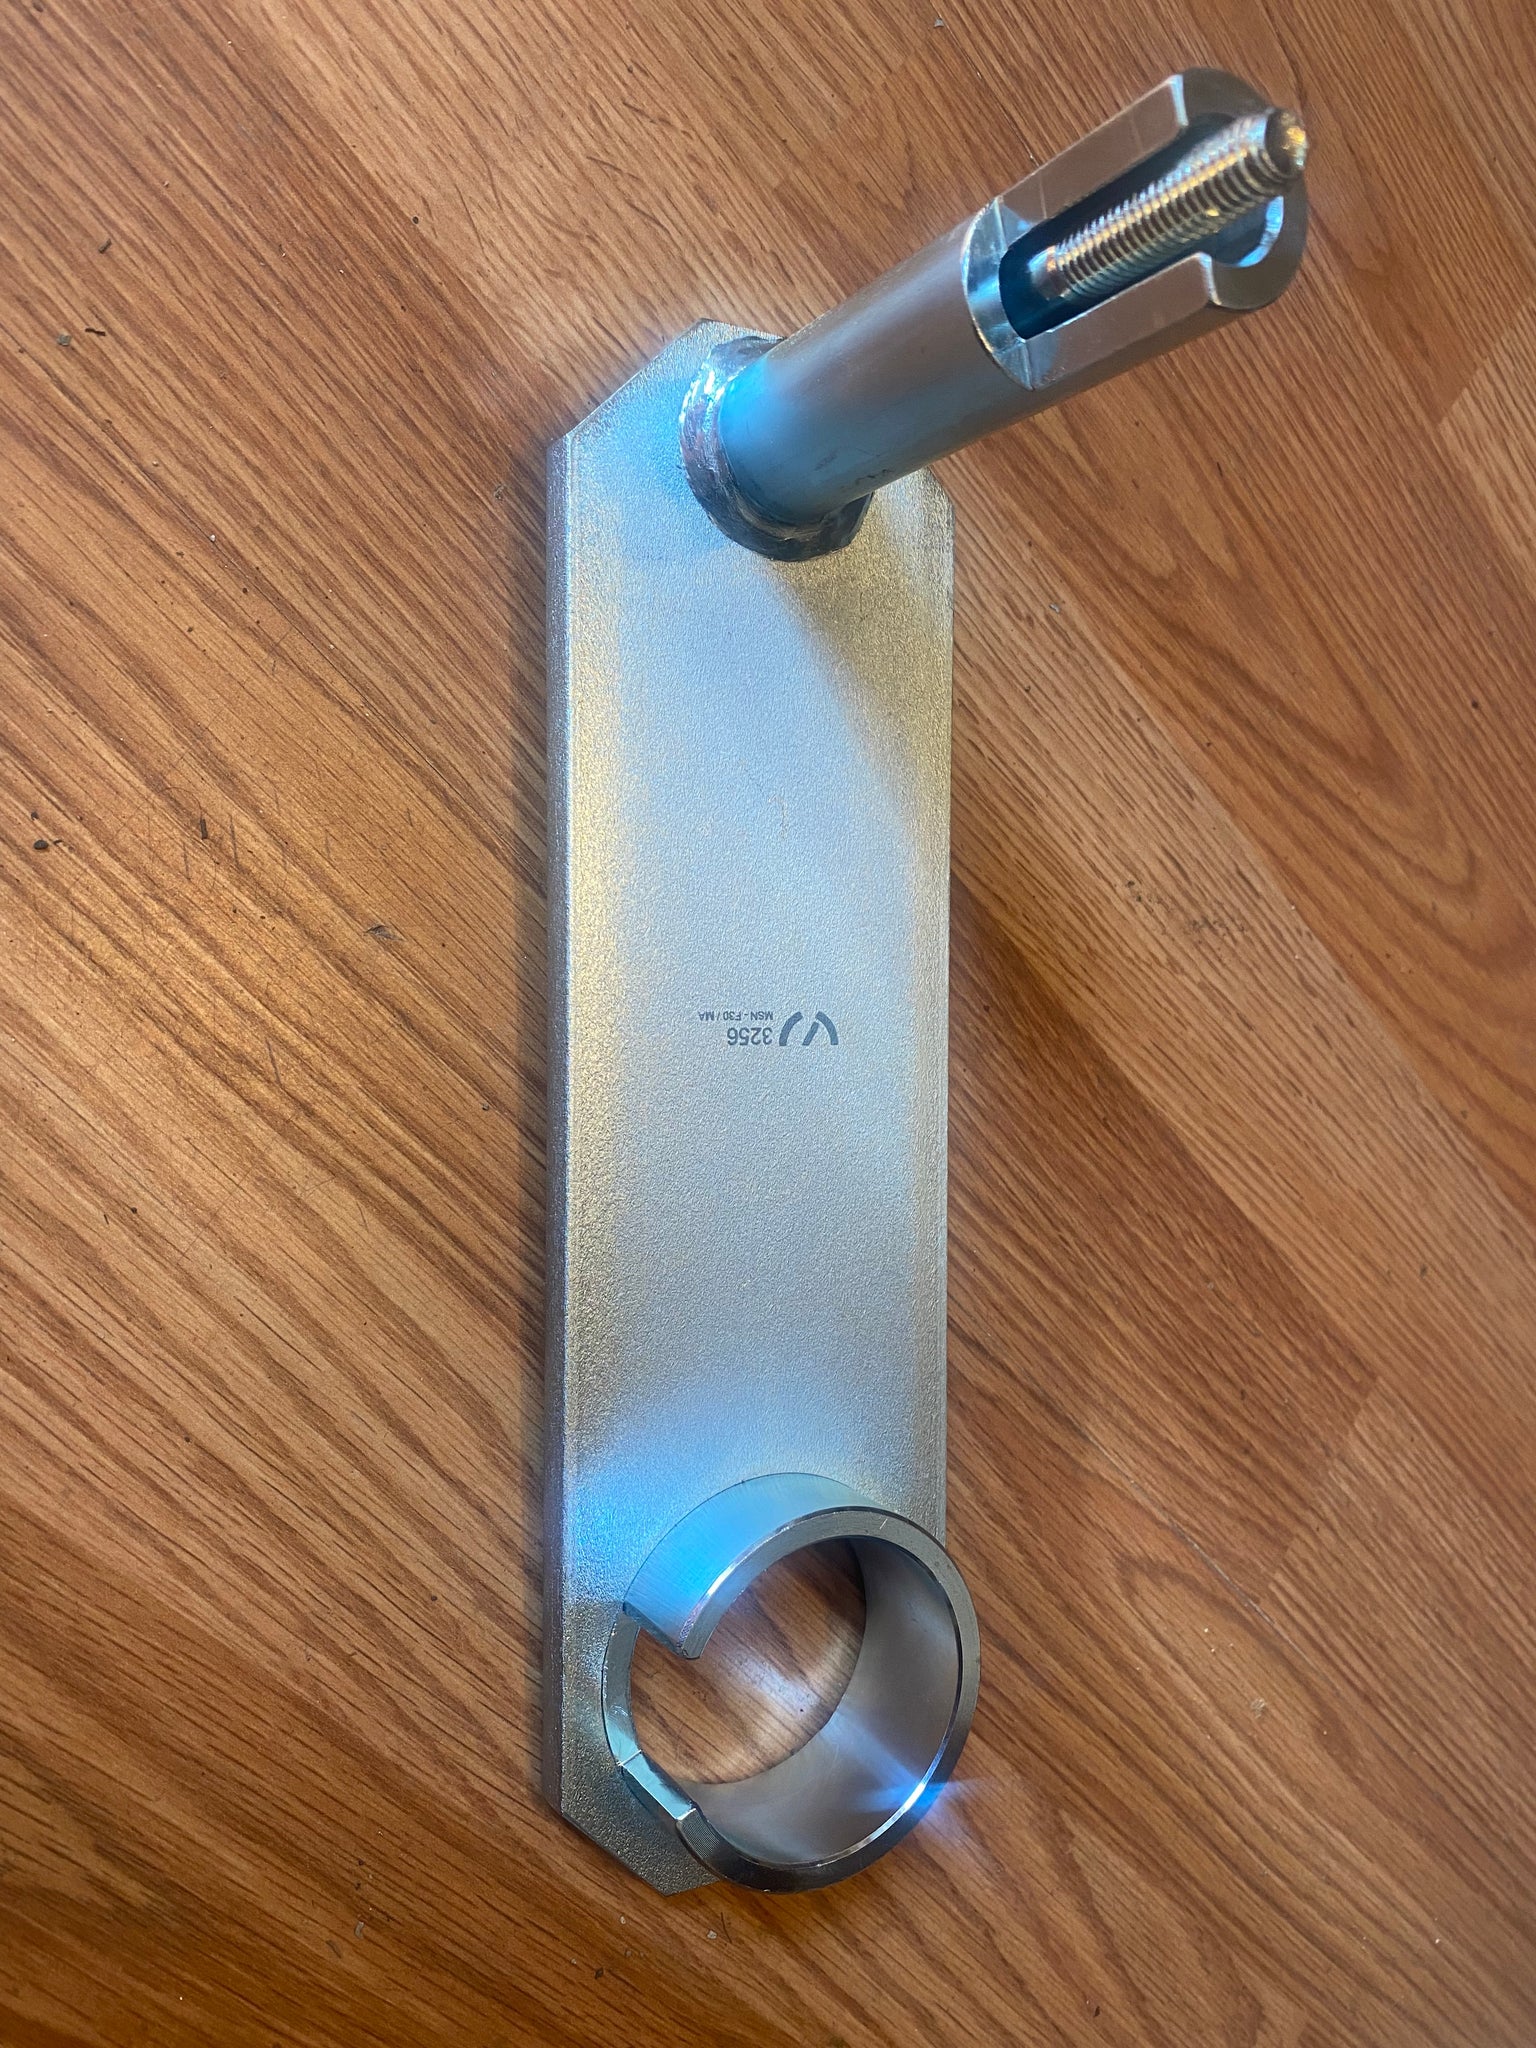 Audi AAN crank lock tool 3256